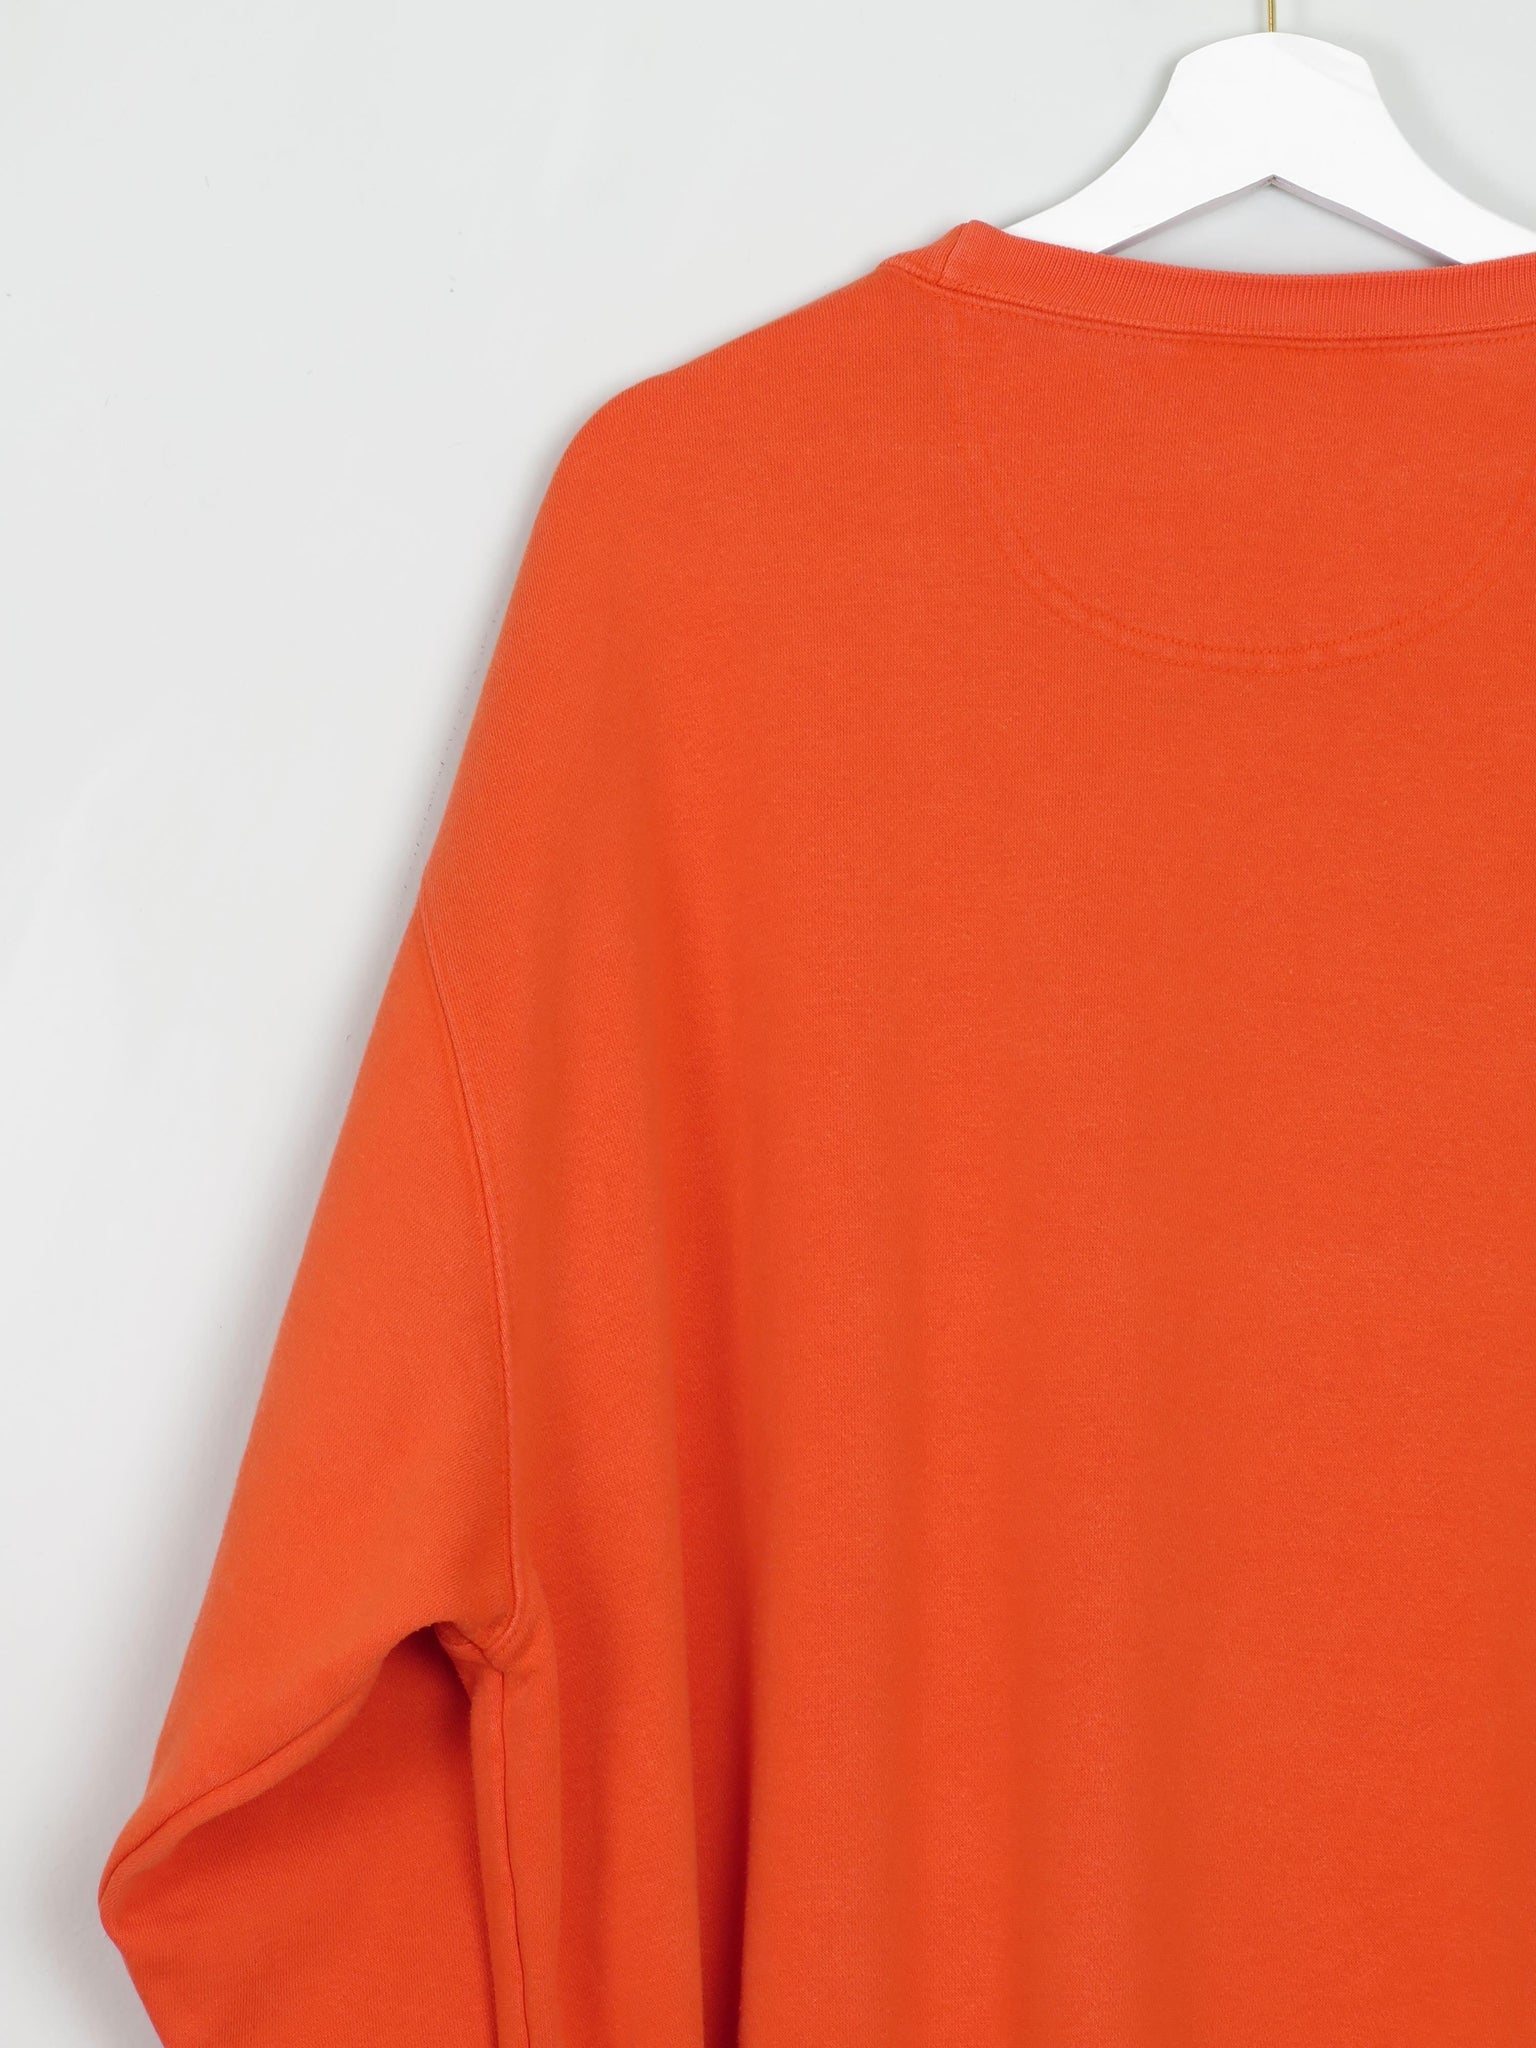 Men's Orange Vintage Nike Team Sweatshirt L - The Harlequin